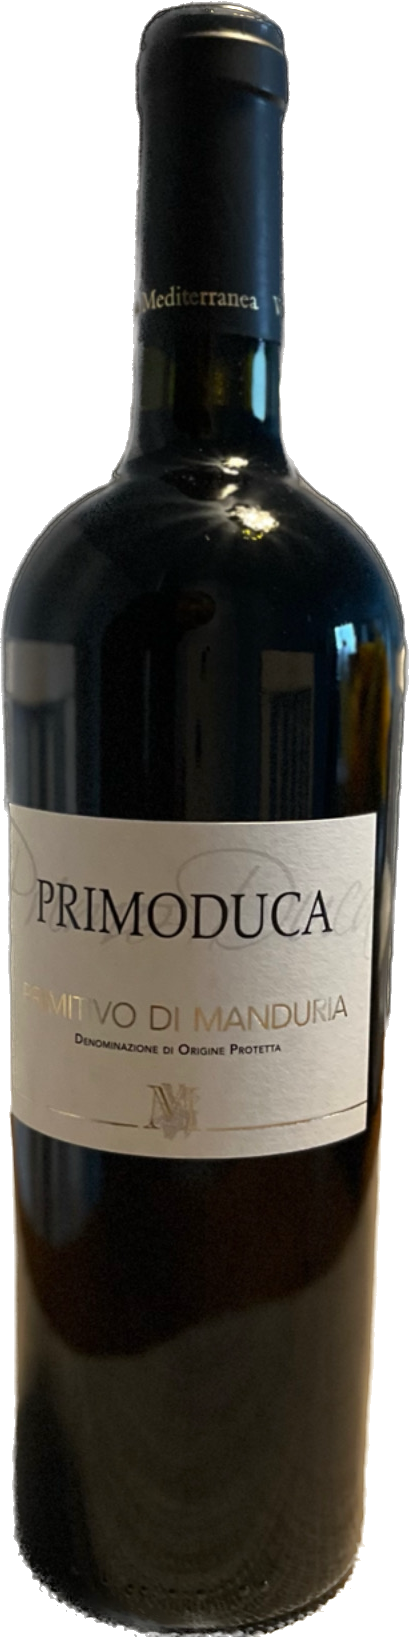 Primoduca Primitivo From Apulia Italy (Pack of 12)